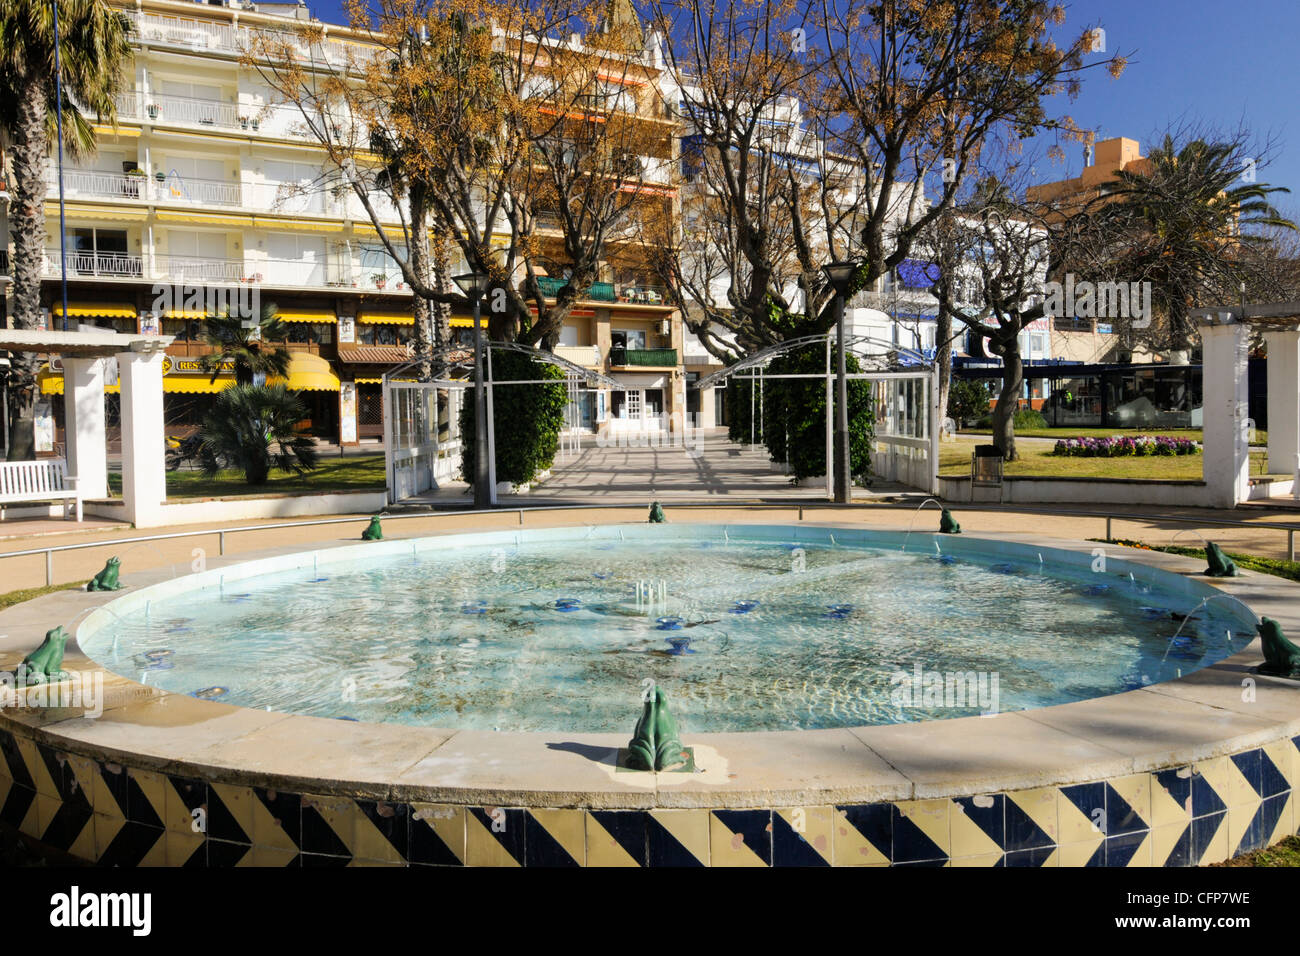 A fountain in Palamos Costa Brava. Stock Photo